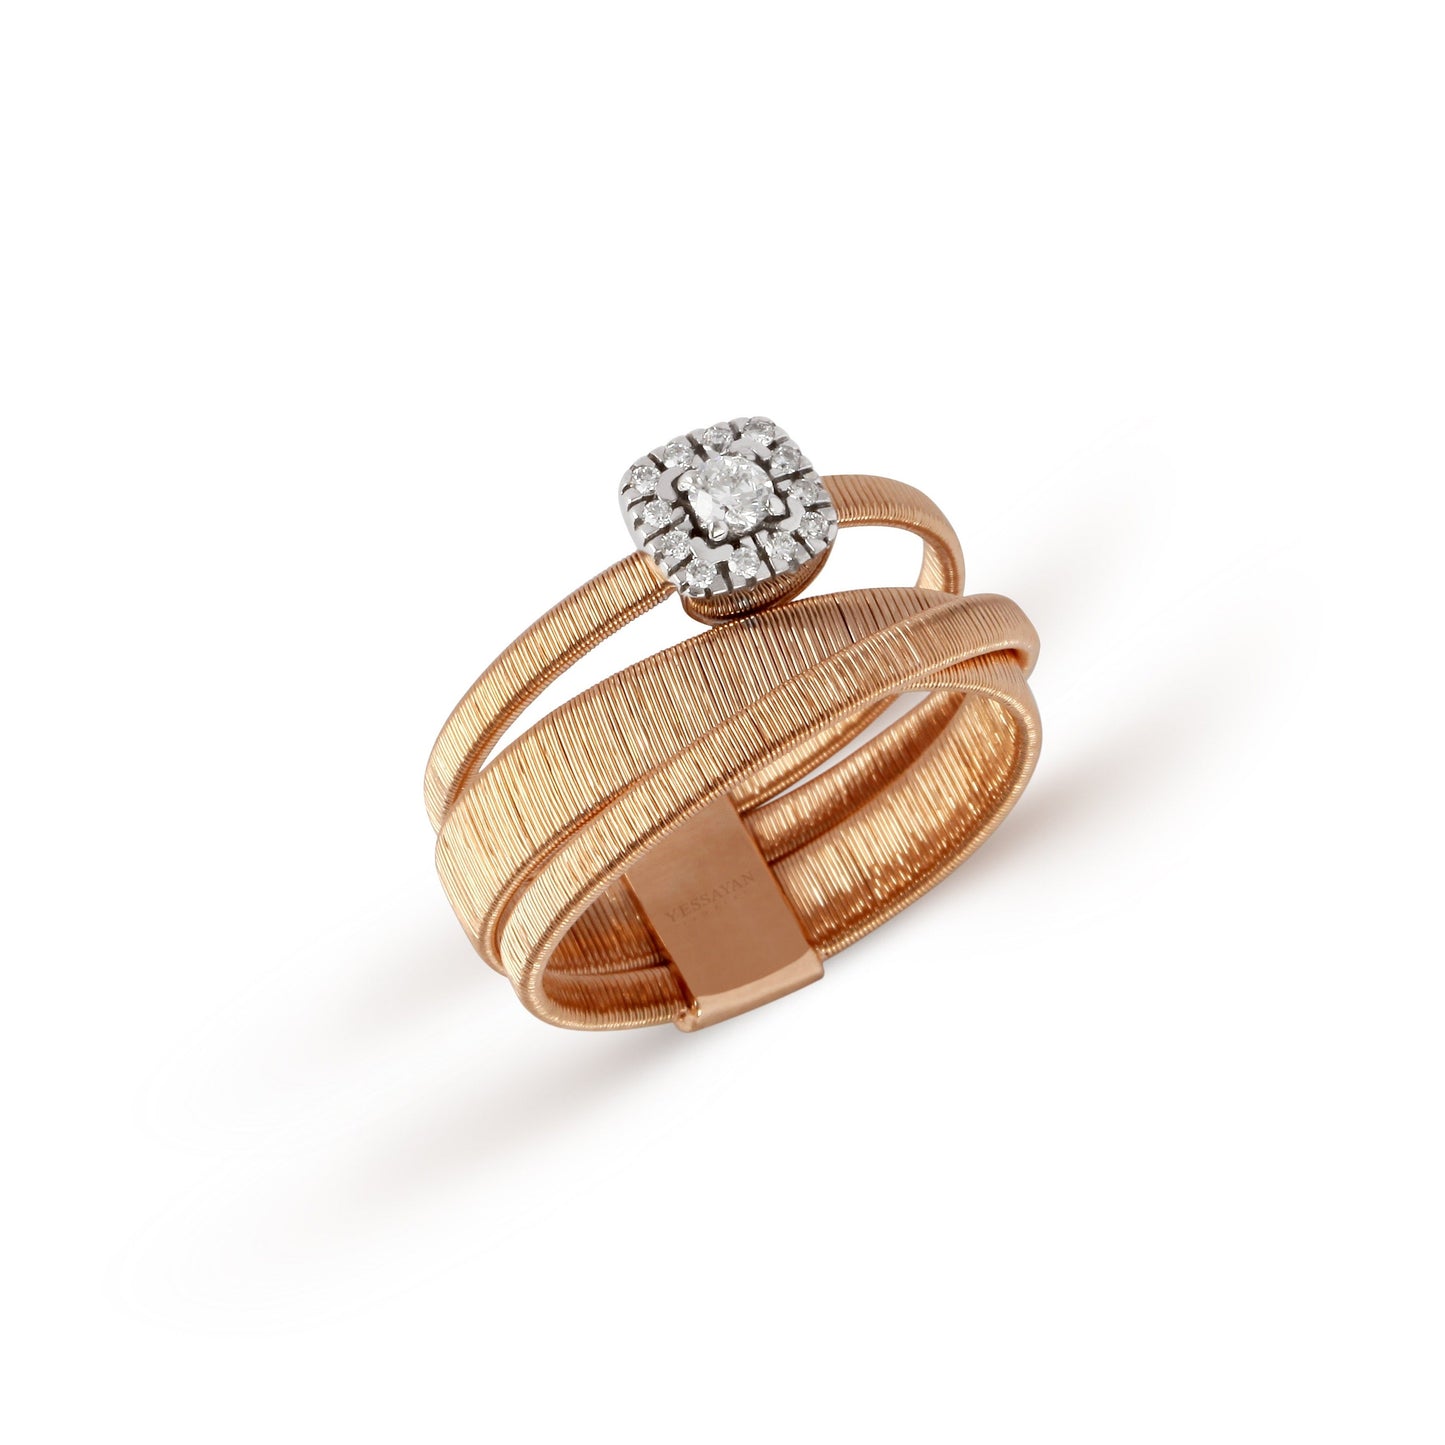 Stacked Diamond Band Ring | jewellery store | diamond rings